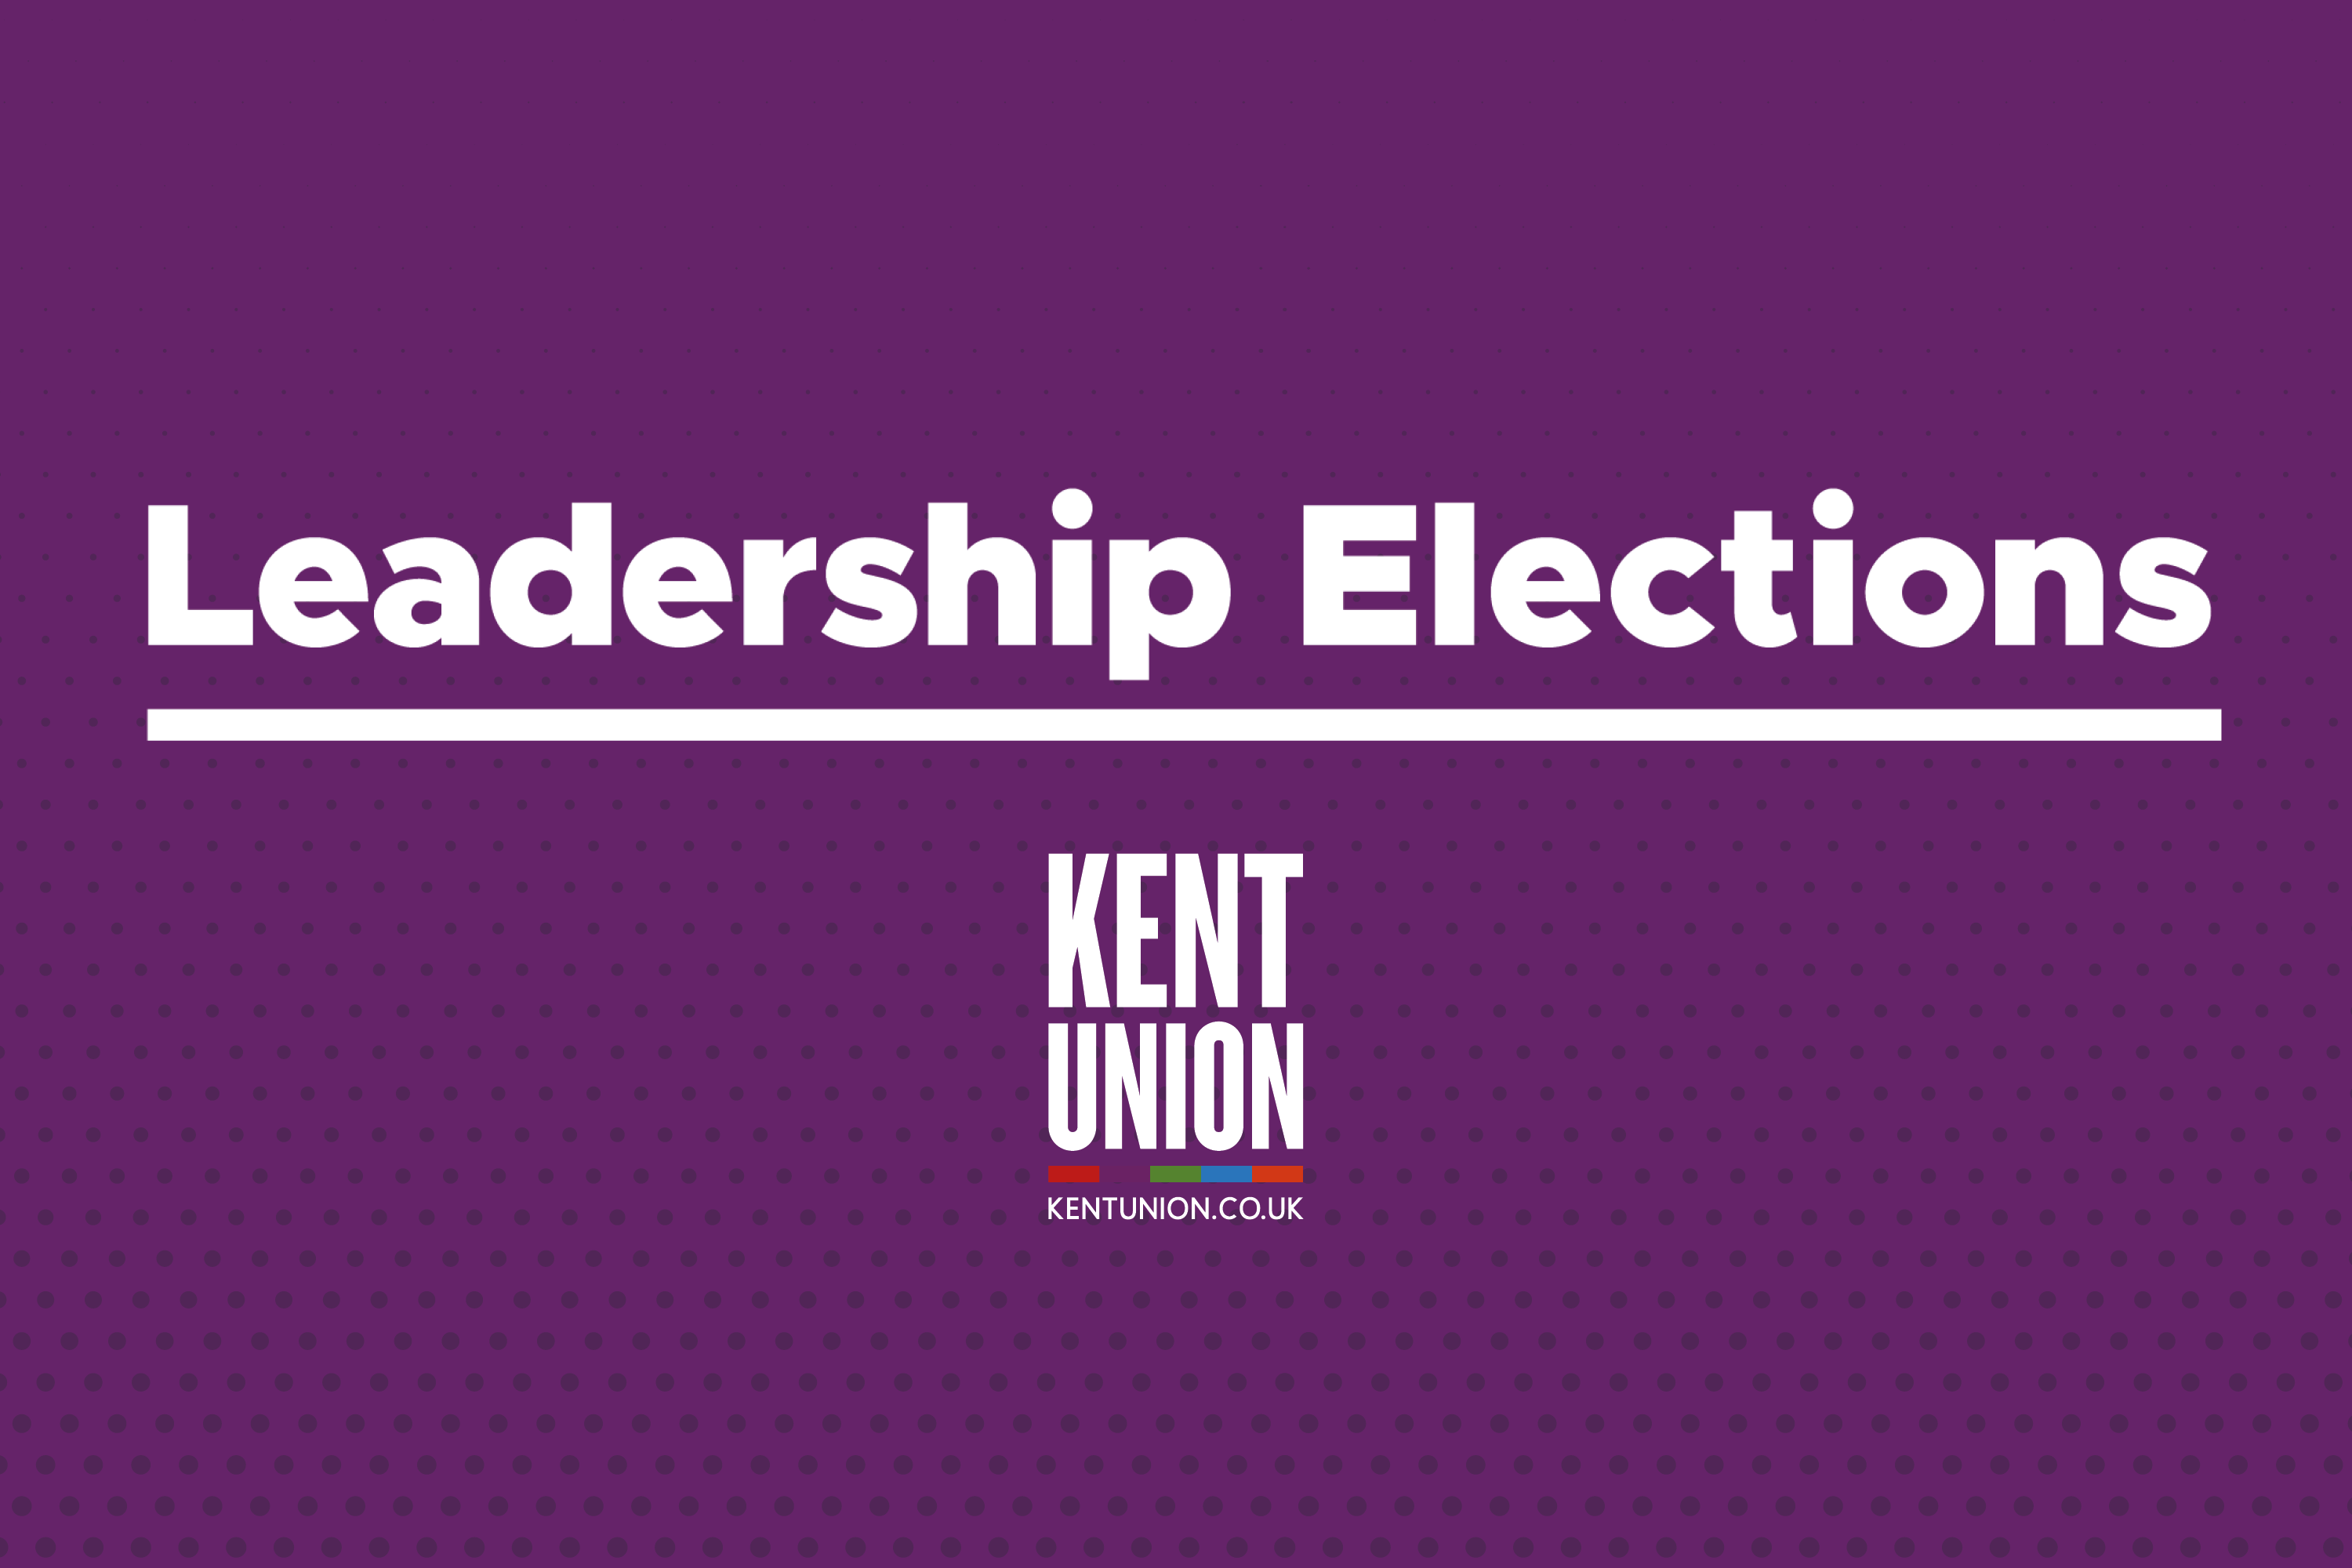 Leadership elections, Kent Union